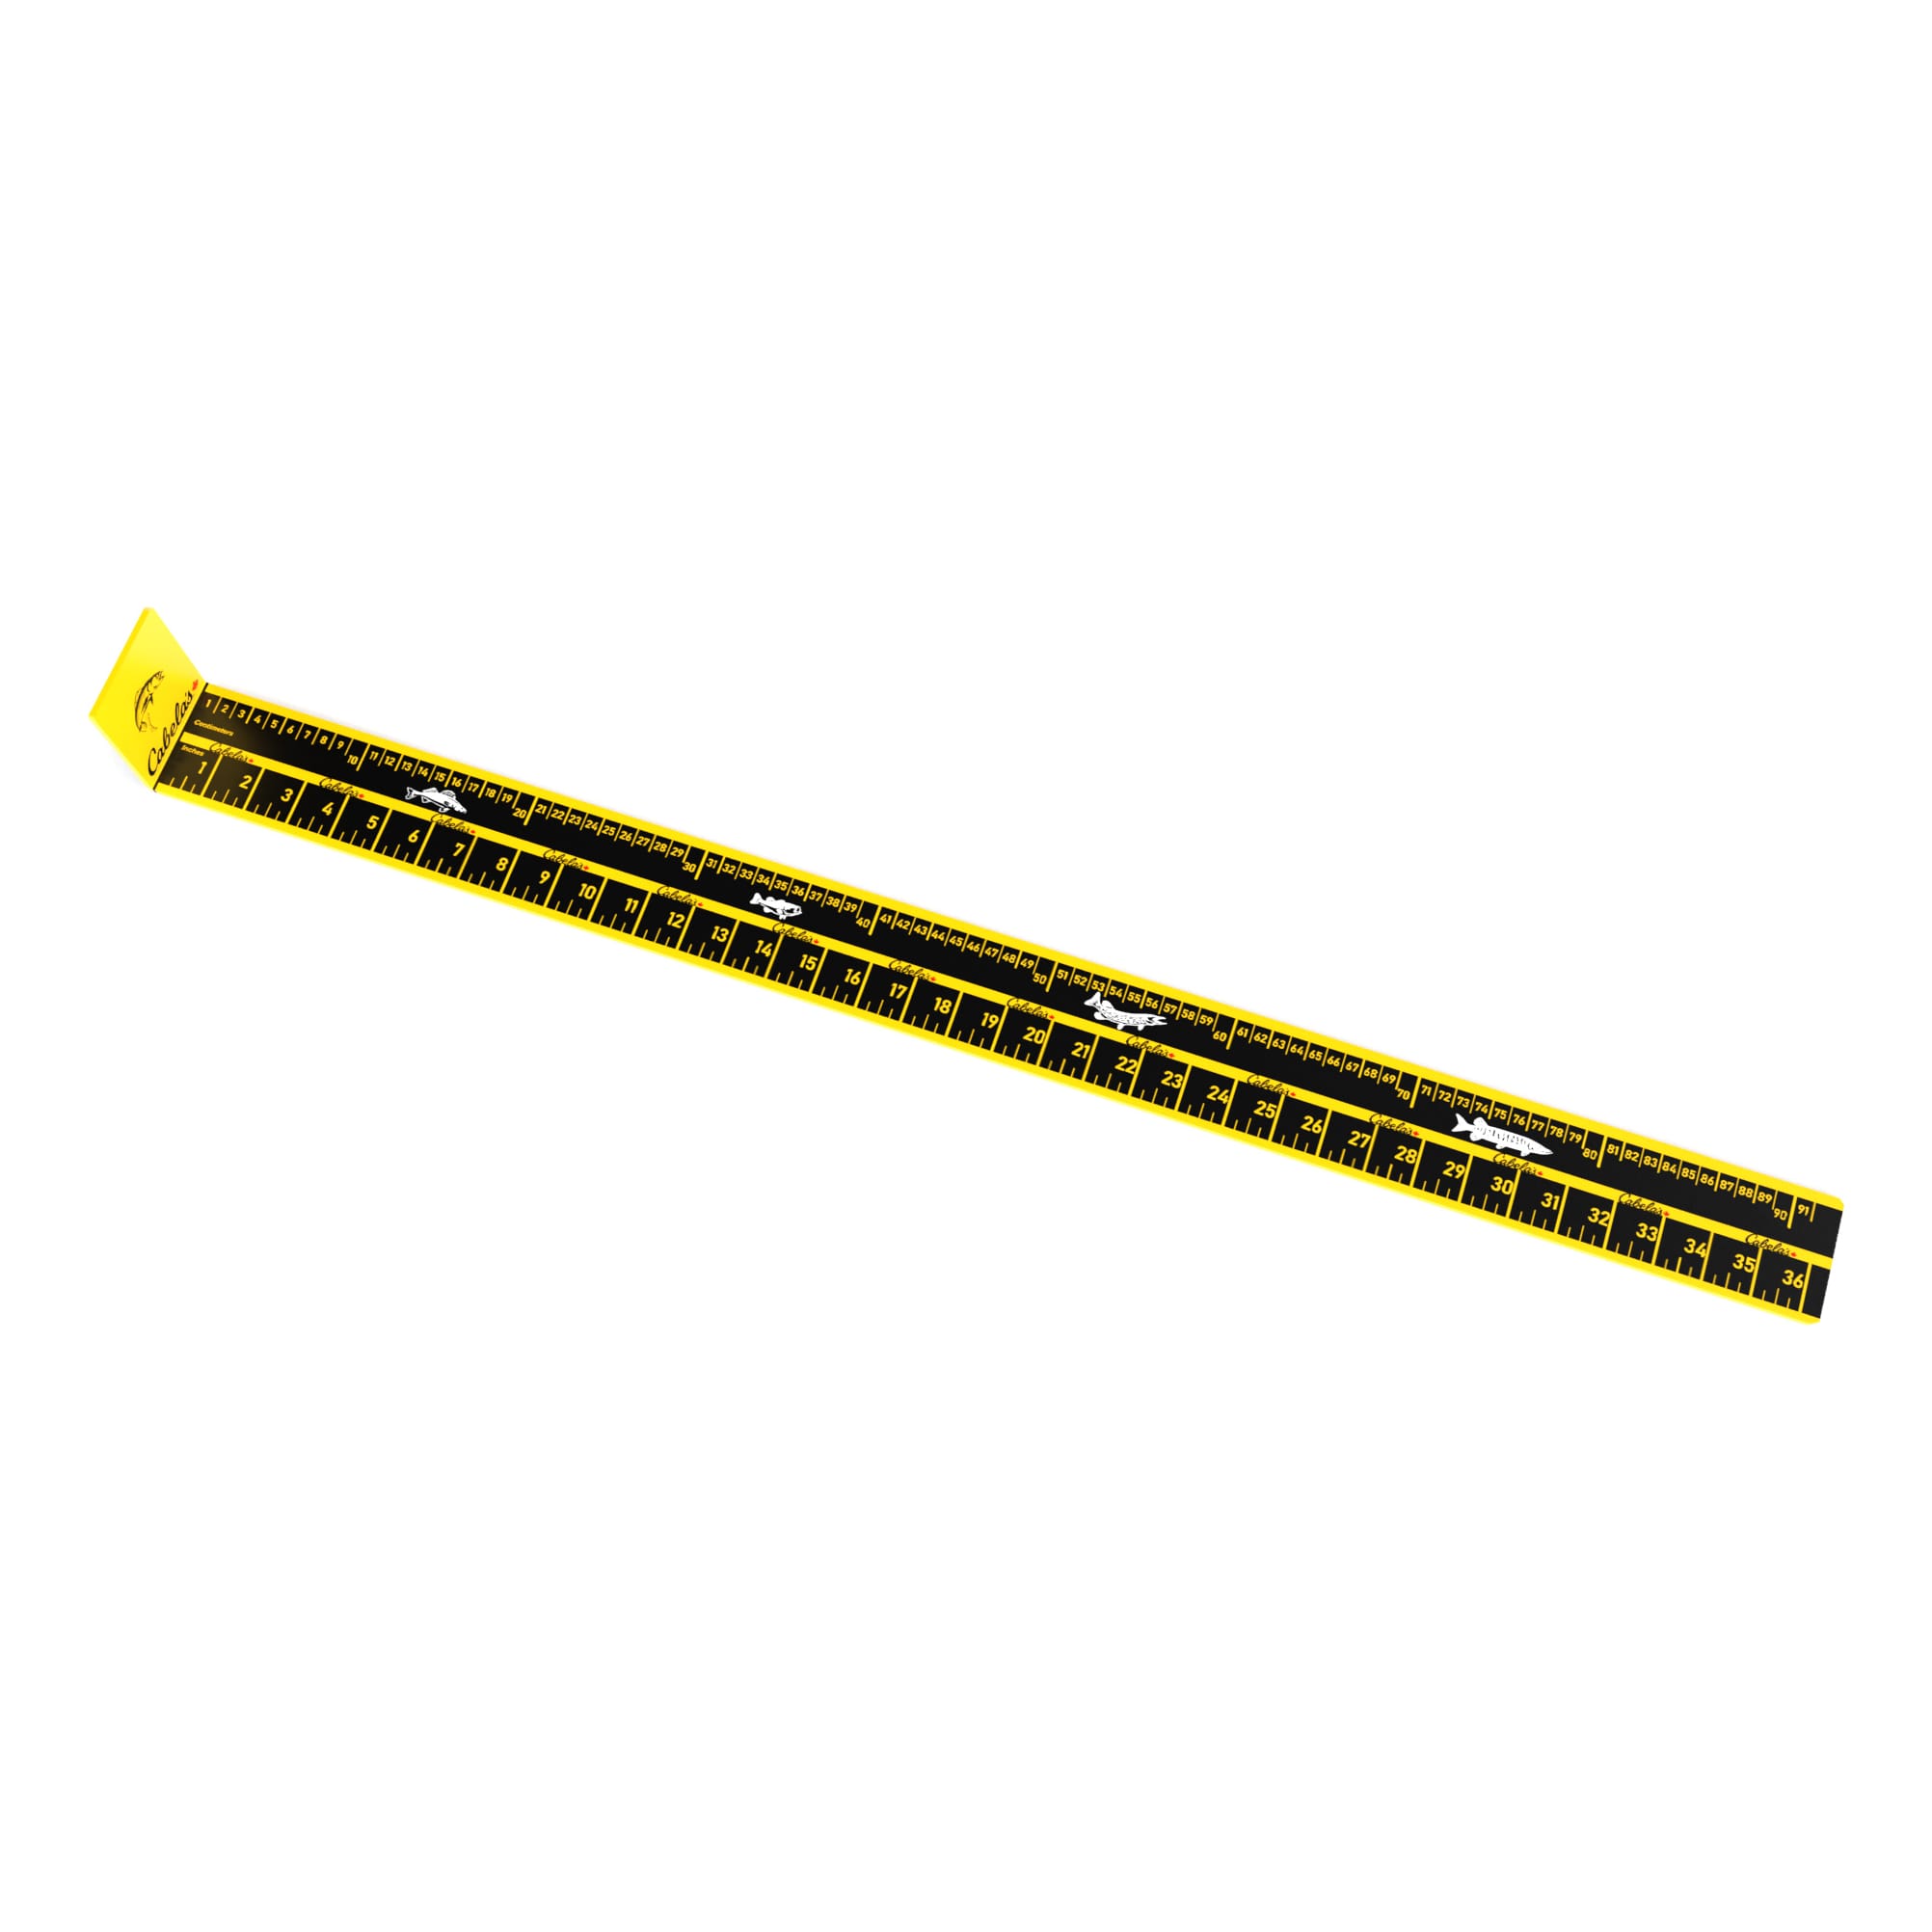 Fish Ruler - 90cm Boat Ruler - Fishing Measuring Tape by FishRule